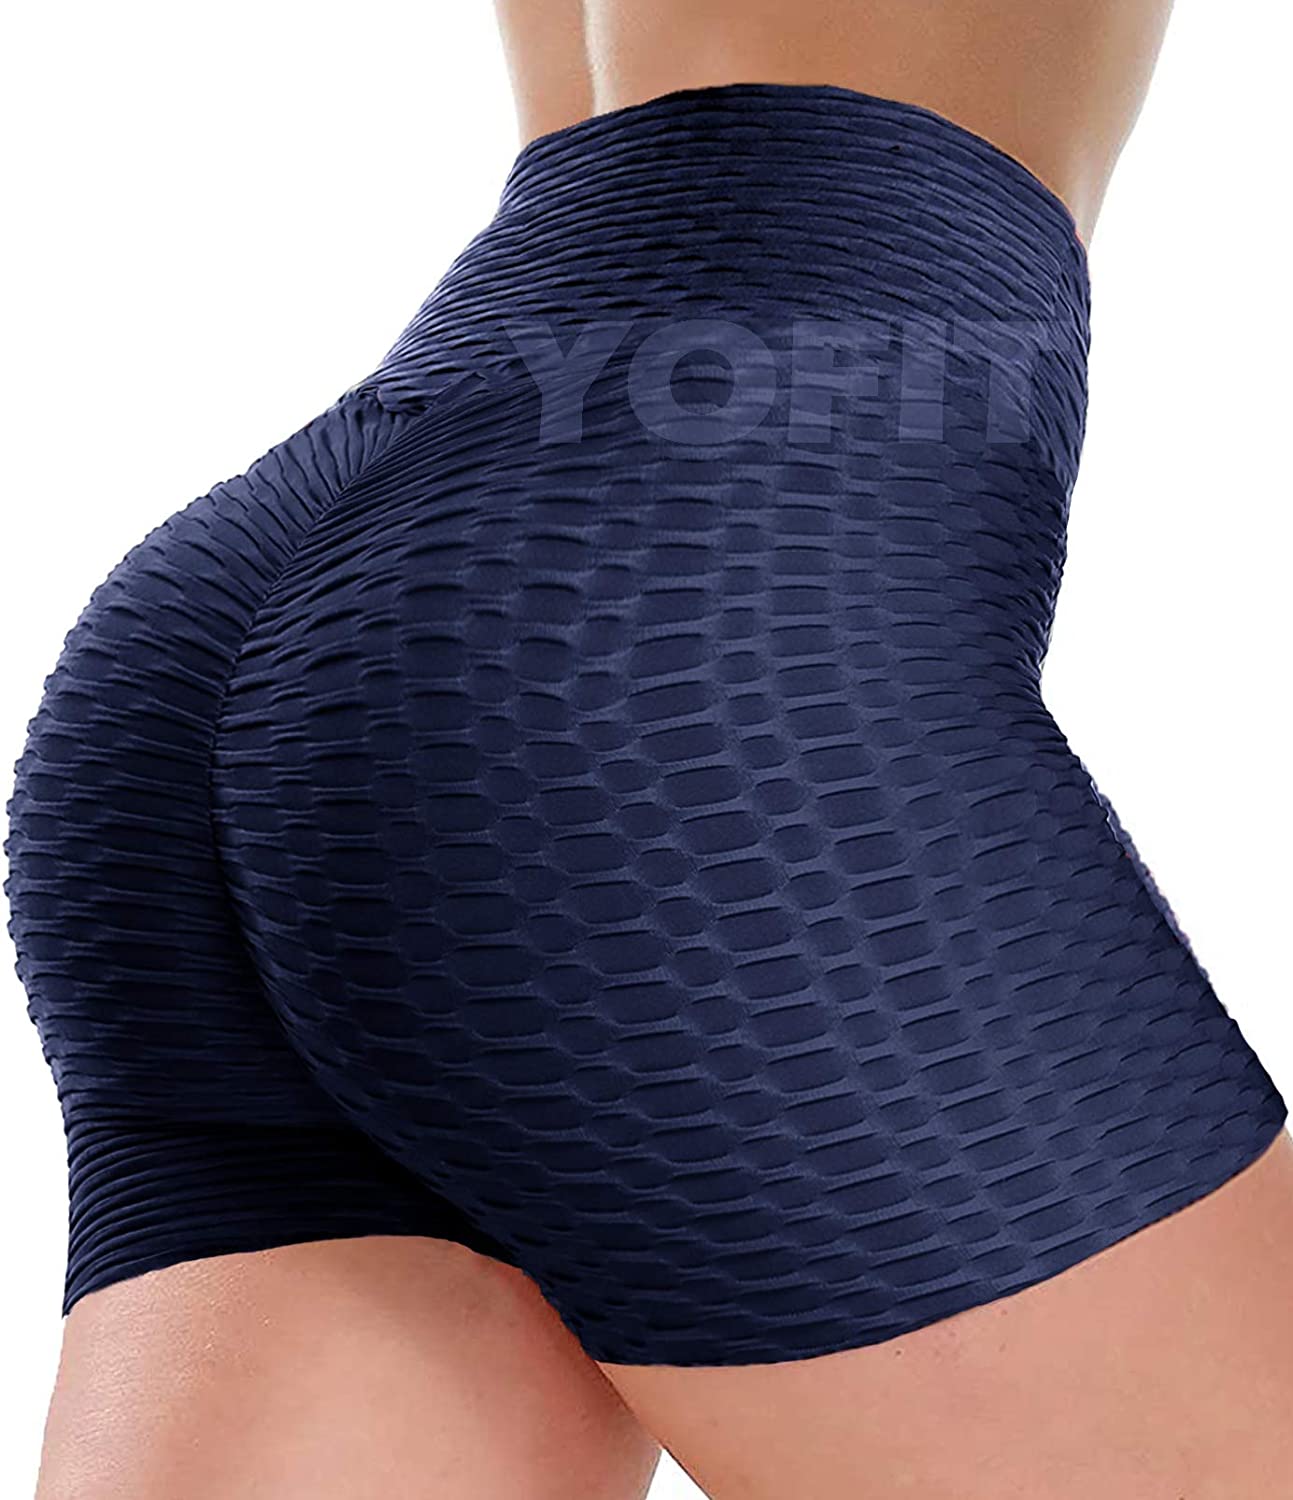 Yofit Women S High Waist Workout Gym Shorts Ruched Butt Lifting Shorts Booty Sho Ebay